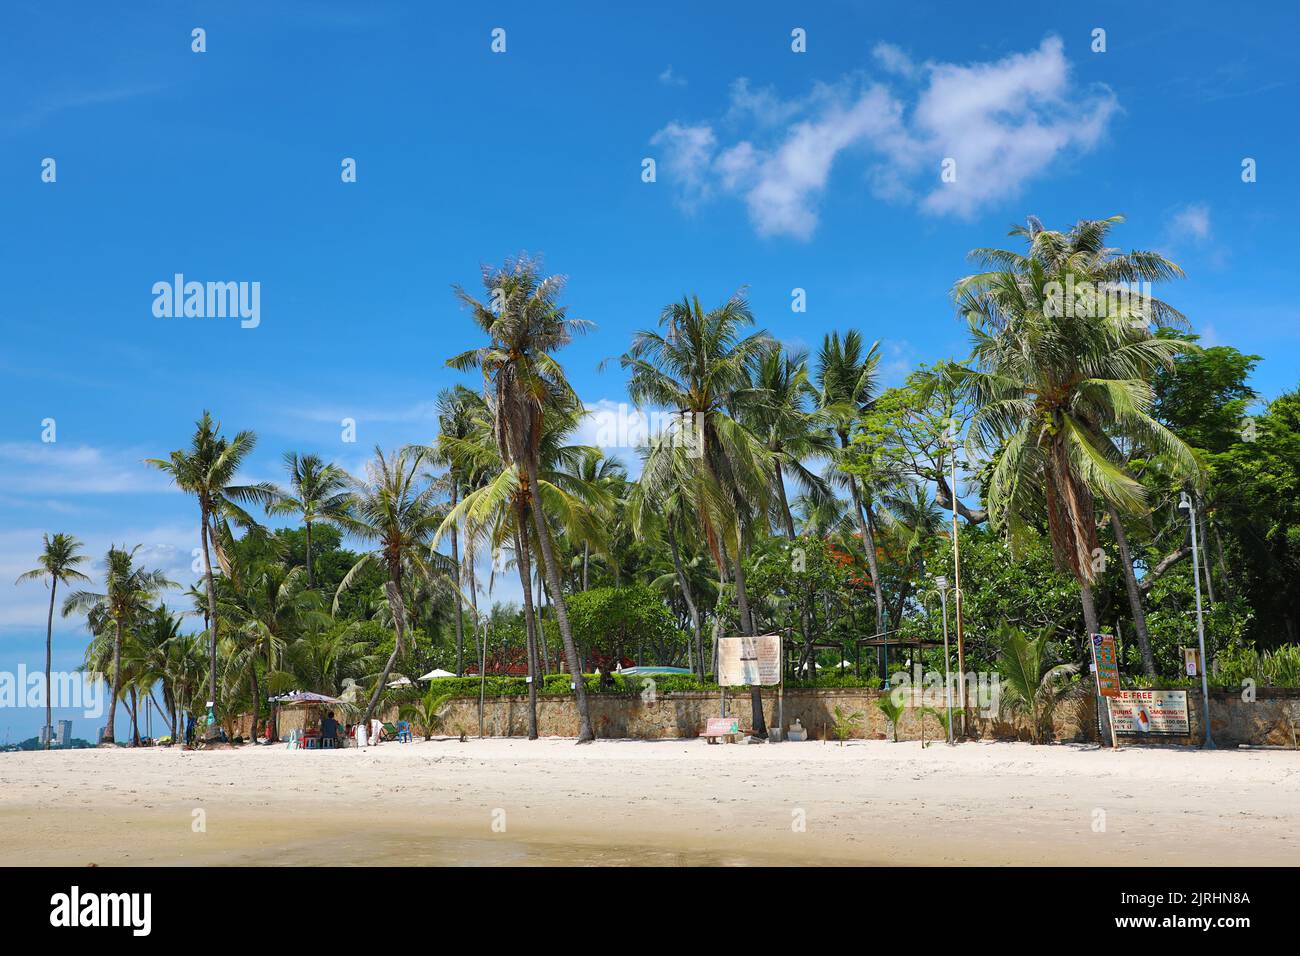 Tropical palm tree beach at Hua Hin, Thailand Stock Photo